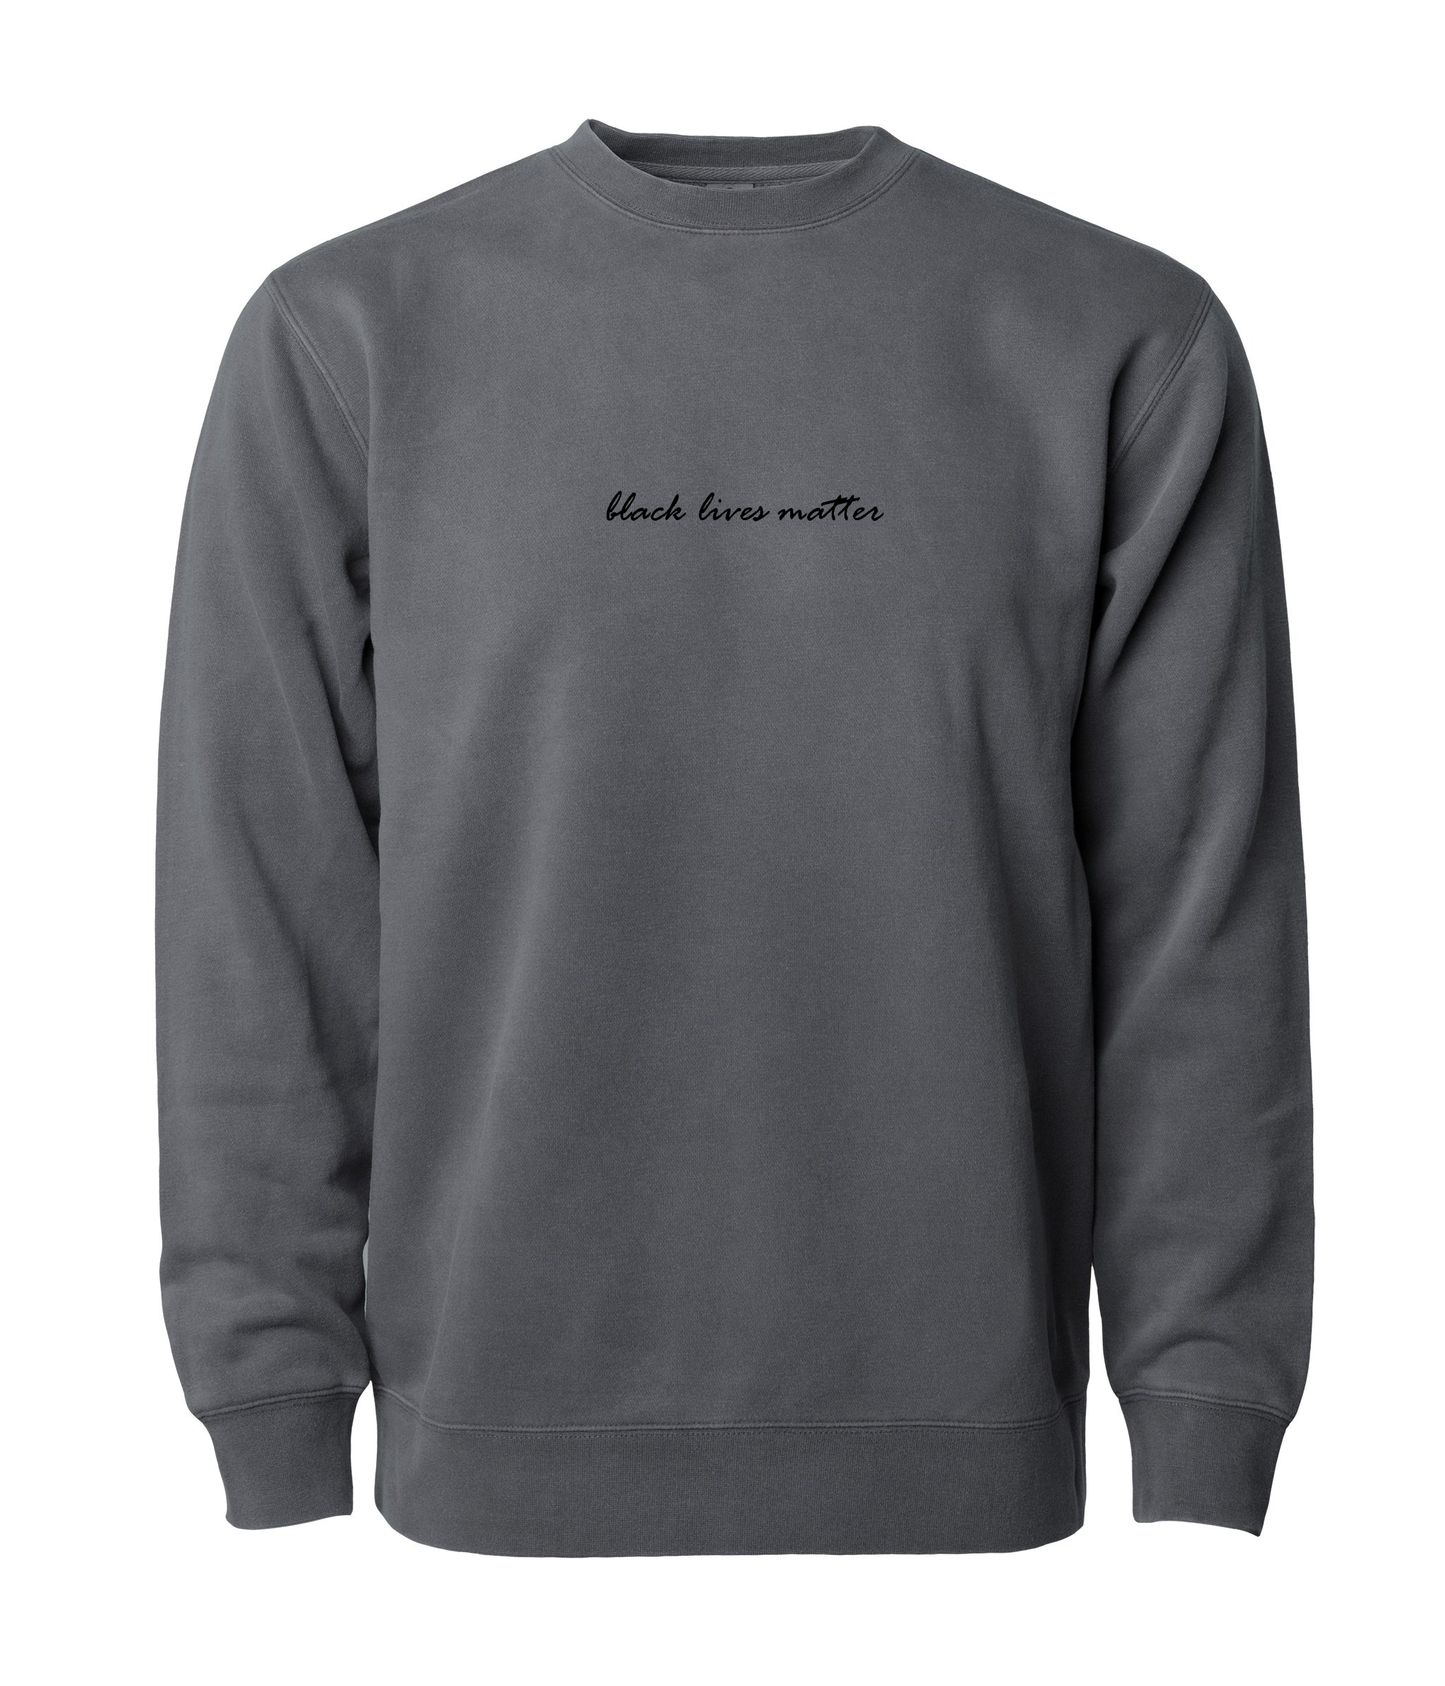 Phenomenally Soft Garment Dye Crewneck Sweatshirt (Black) - Black Lives Matter